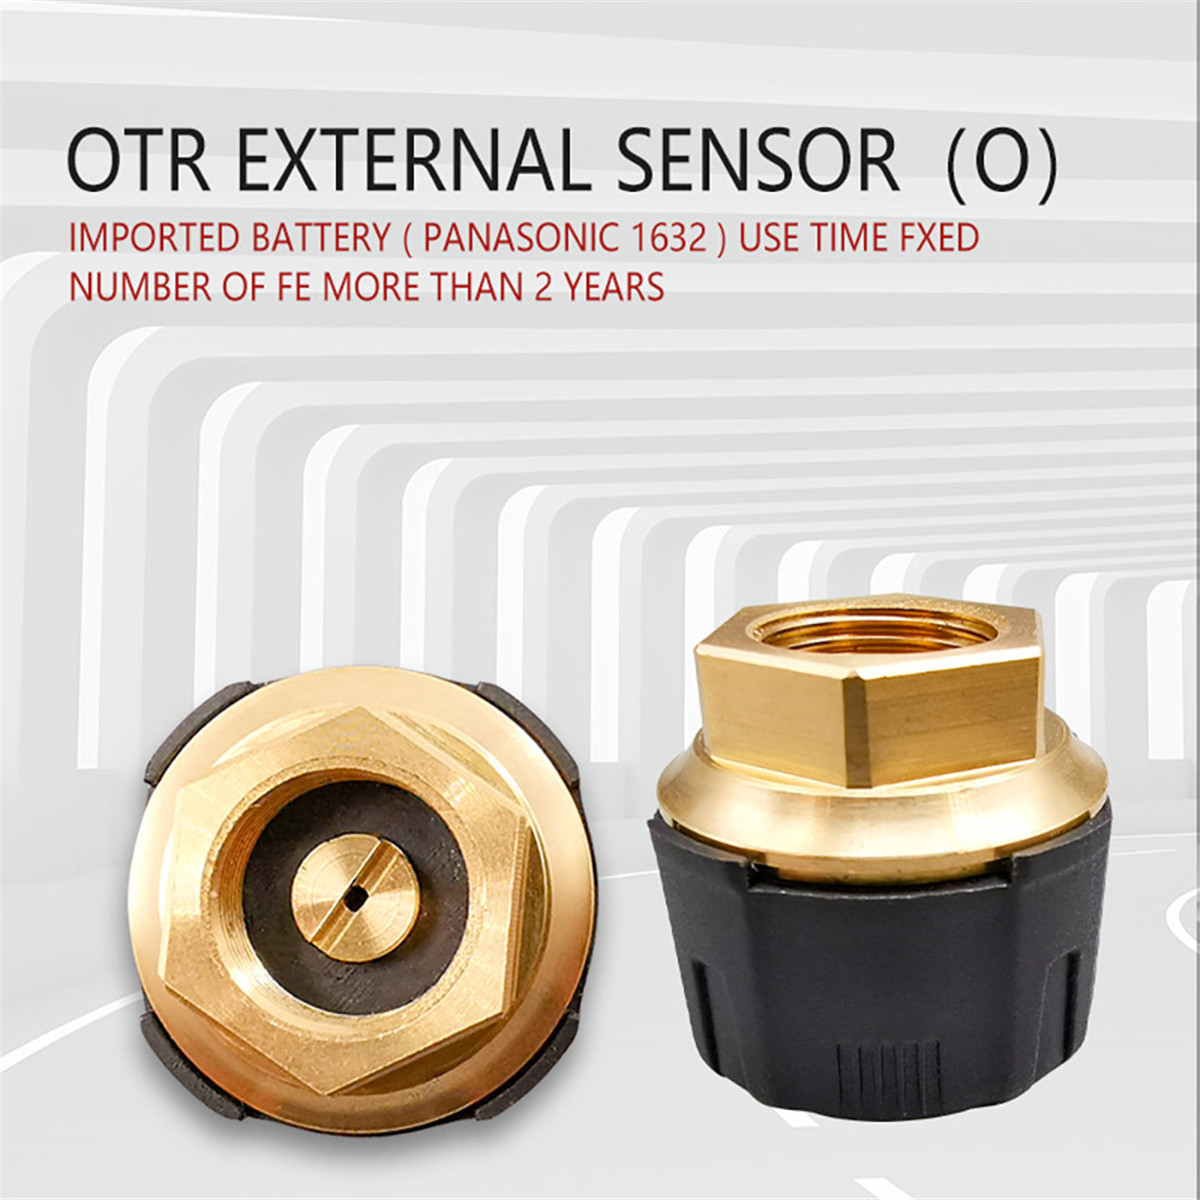 OTR EXTERNE Sensor01 (8)